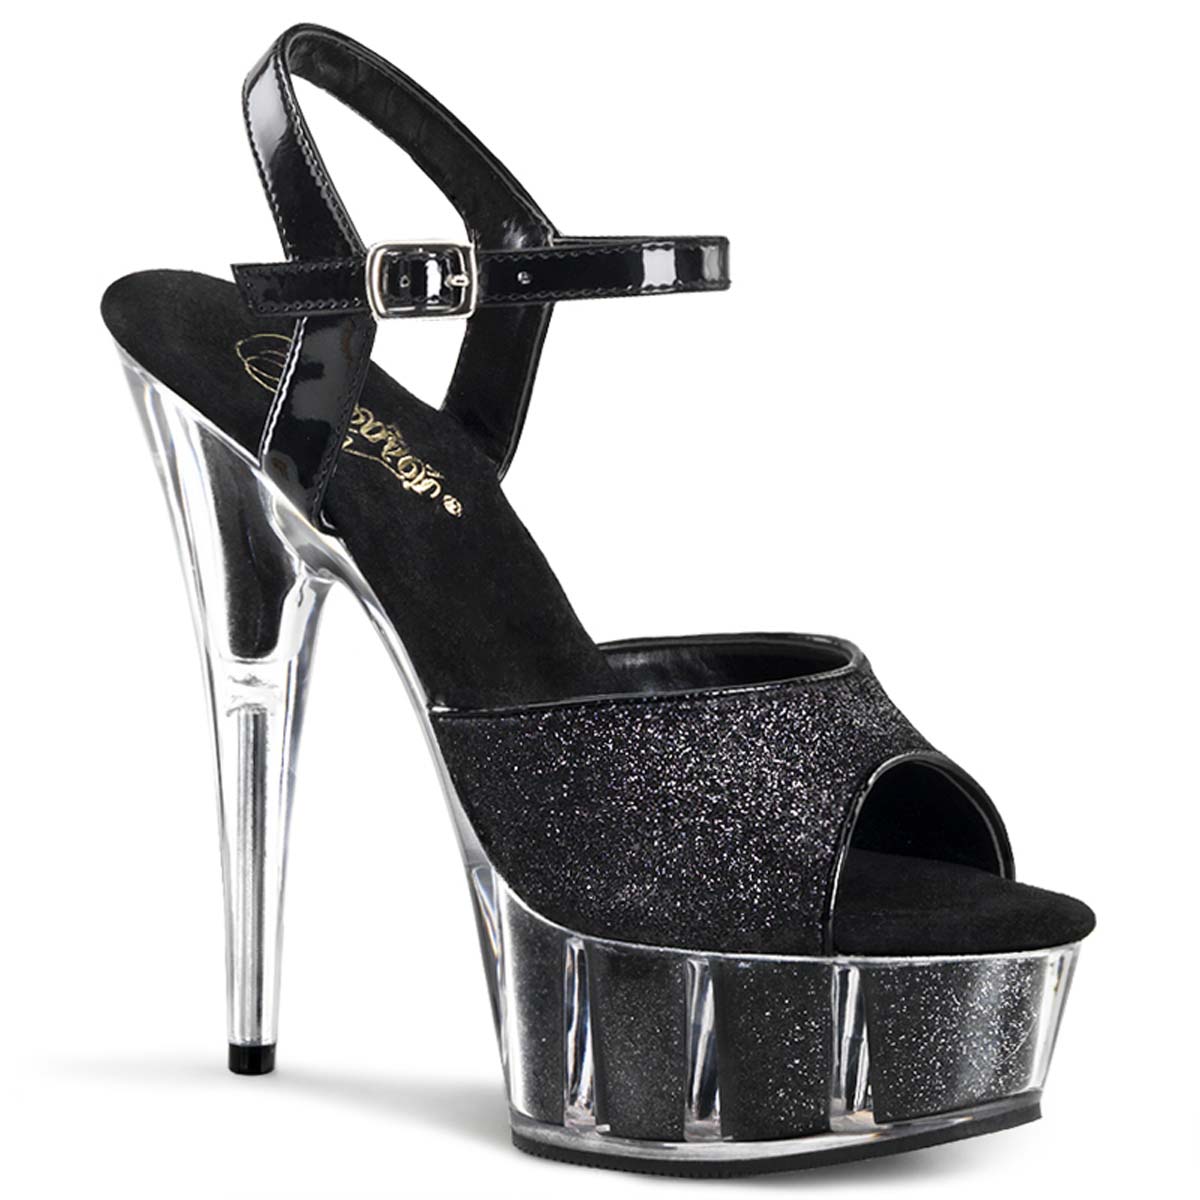 Pleaser Delight-609-5G - Black Glitter/Black Glitter in Sexy Heels ...